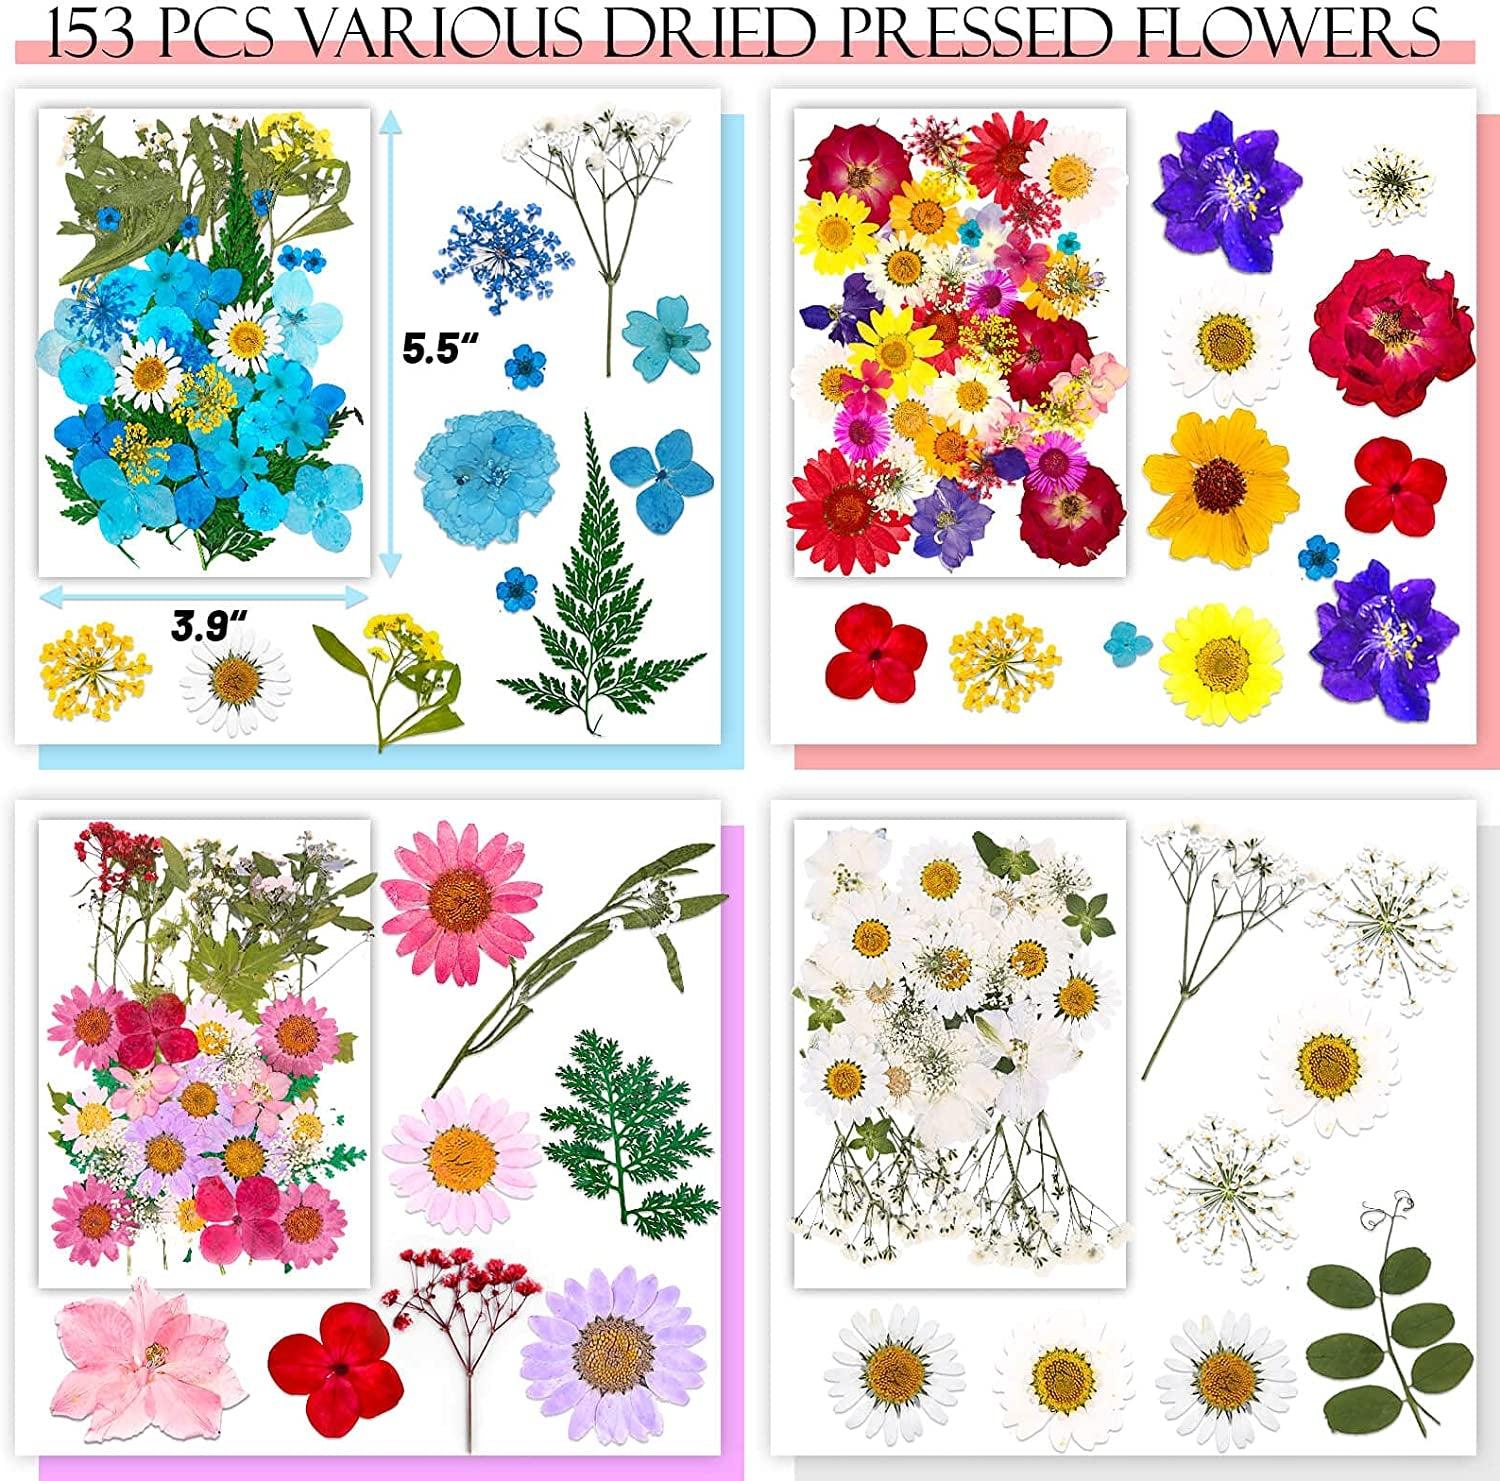 144pcs Natural Dried Pressed Flowers For Resin,dry Flower Bulk